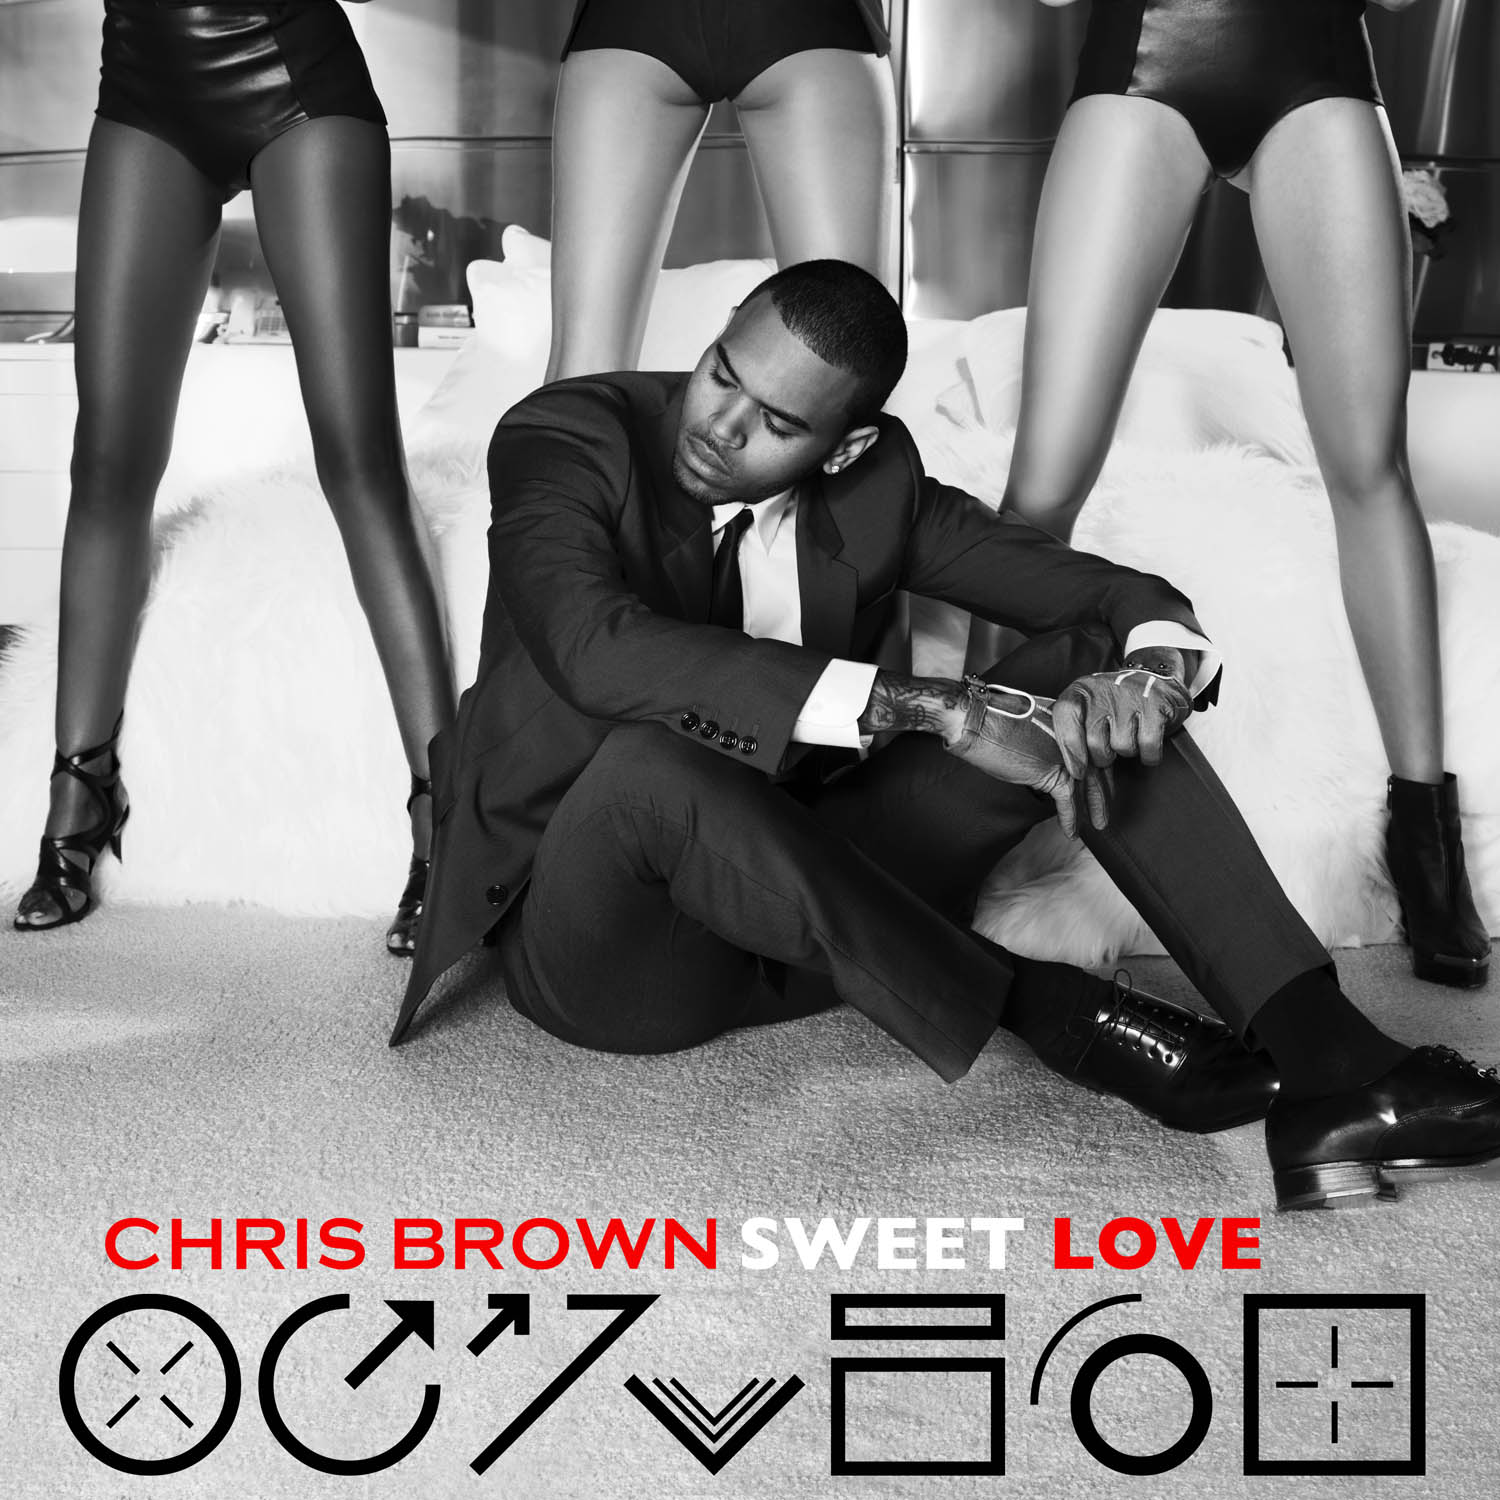 Chris Brown 2012